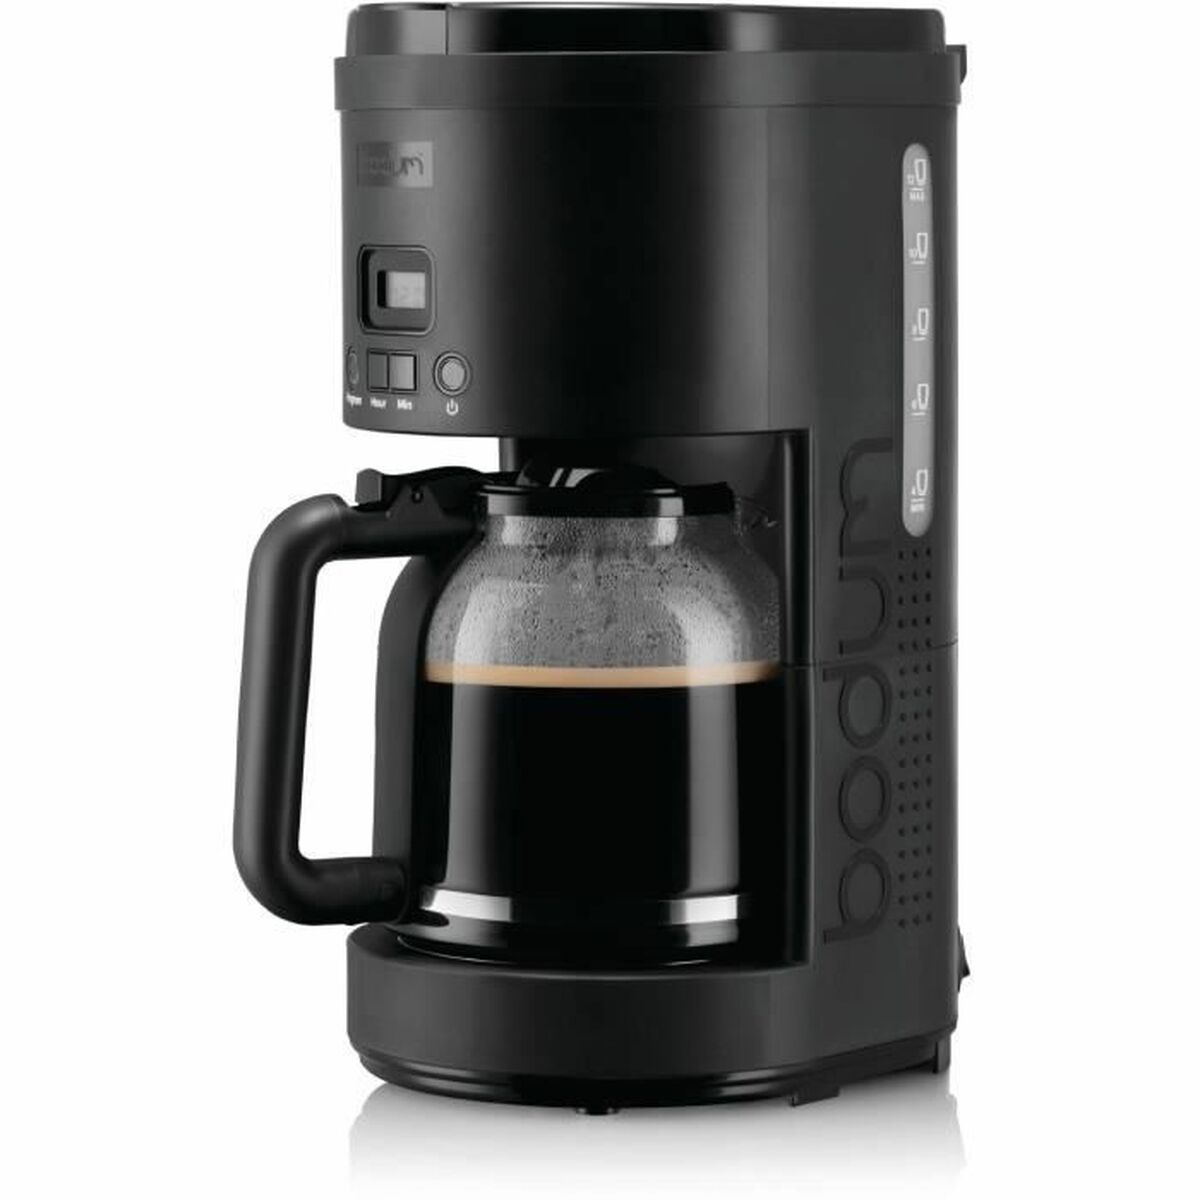 Filterkaffeemaschine Bodum SM3590 900 W 1,5 L - CA International 